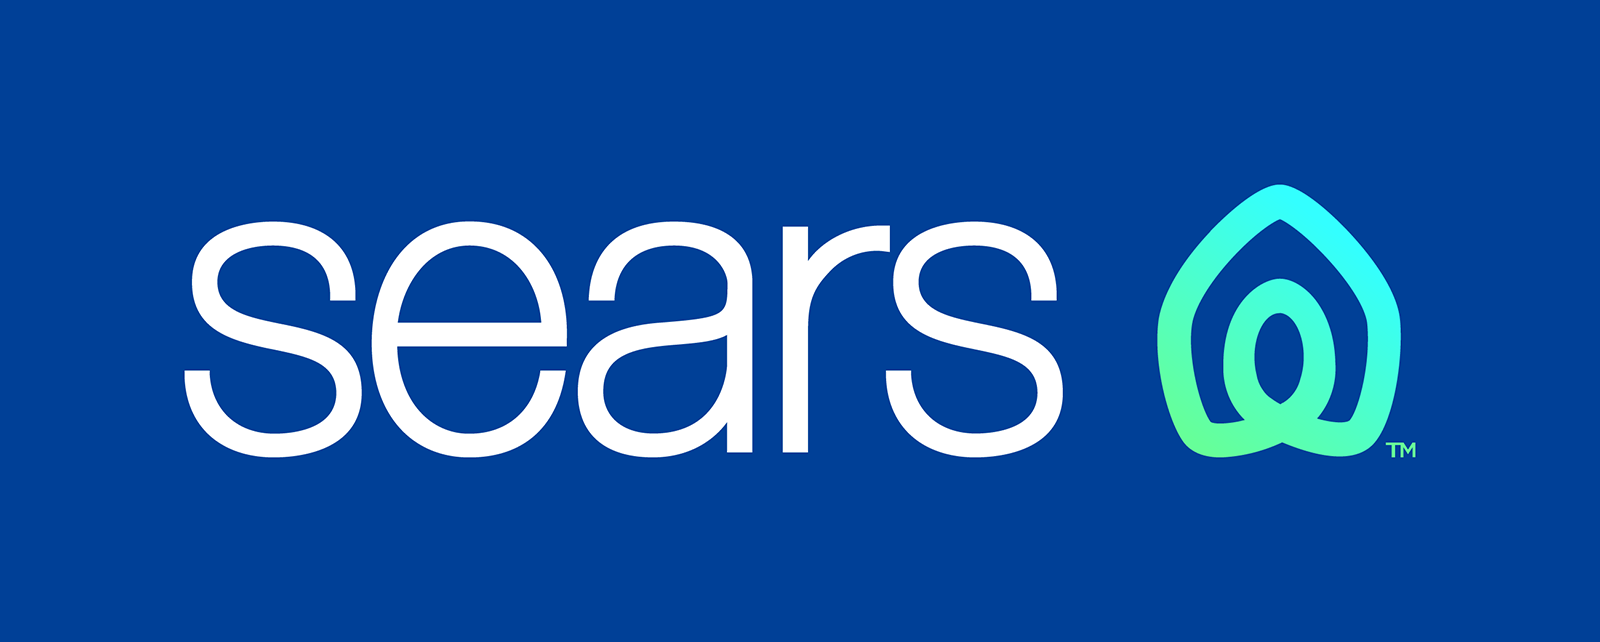 Sears百货连锁店品牌启用全新的品牌VI形象设计-深圳VI设计2